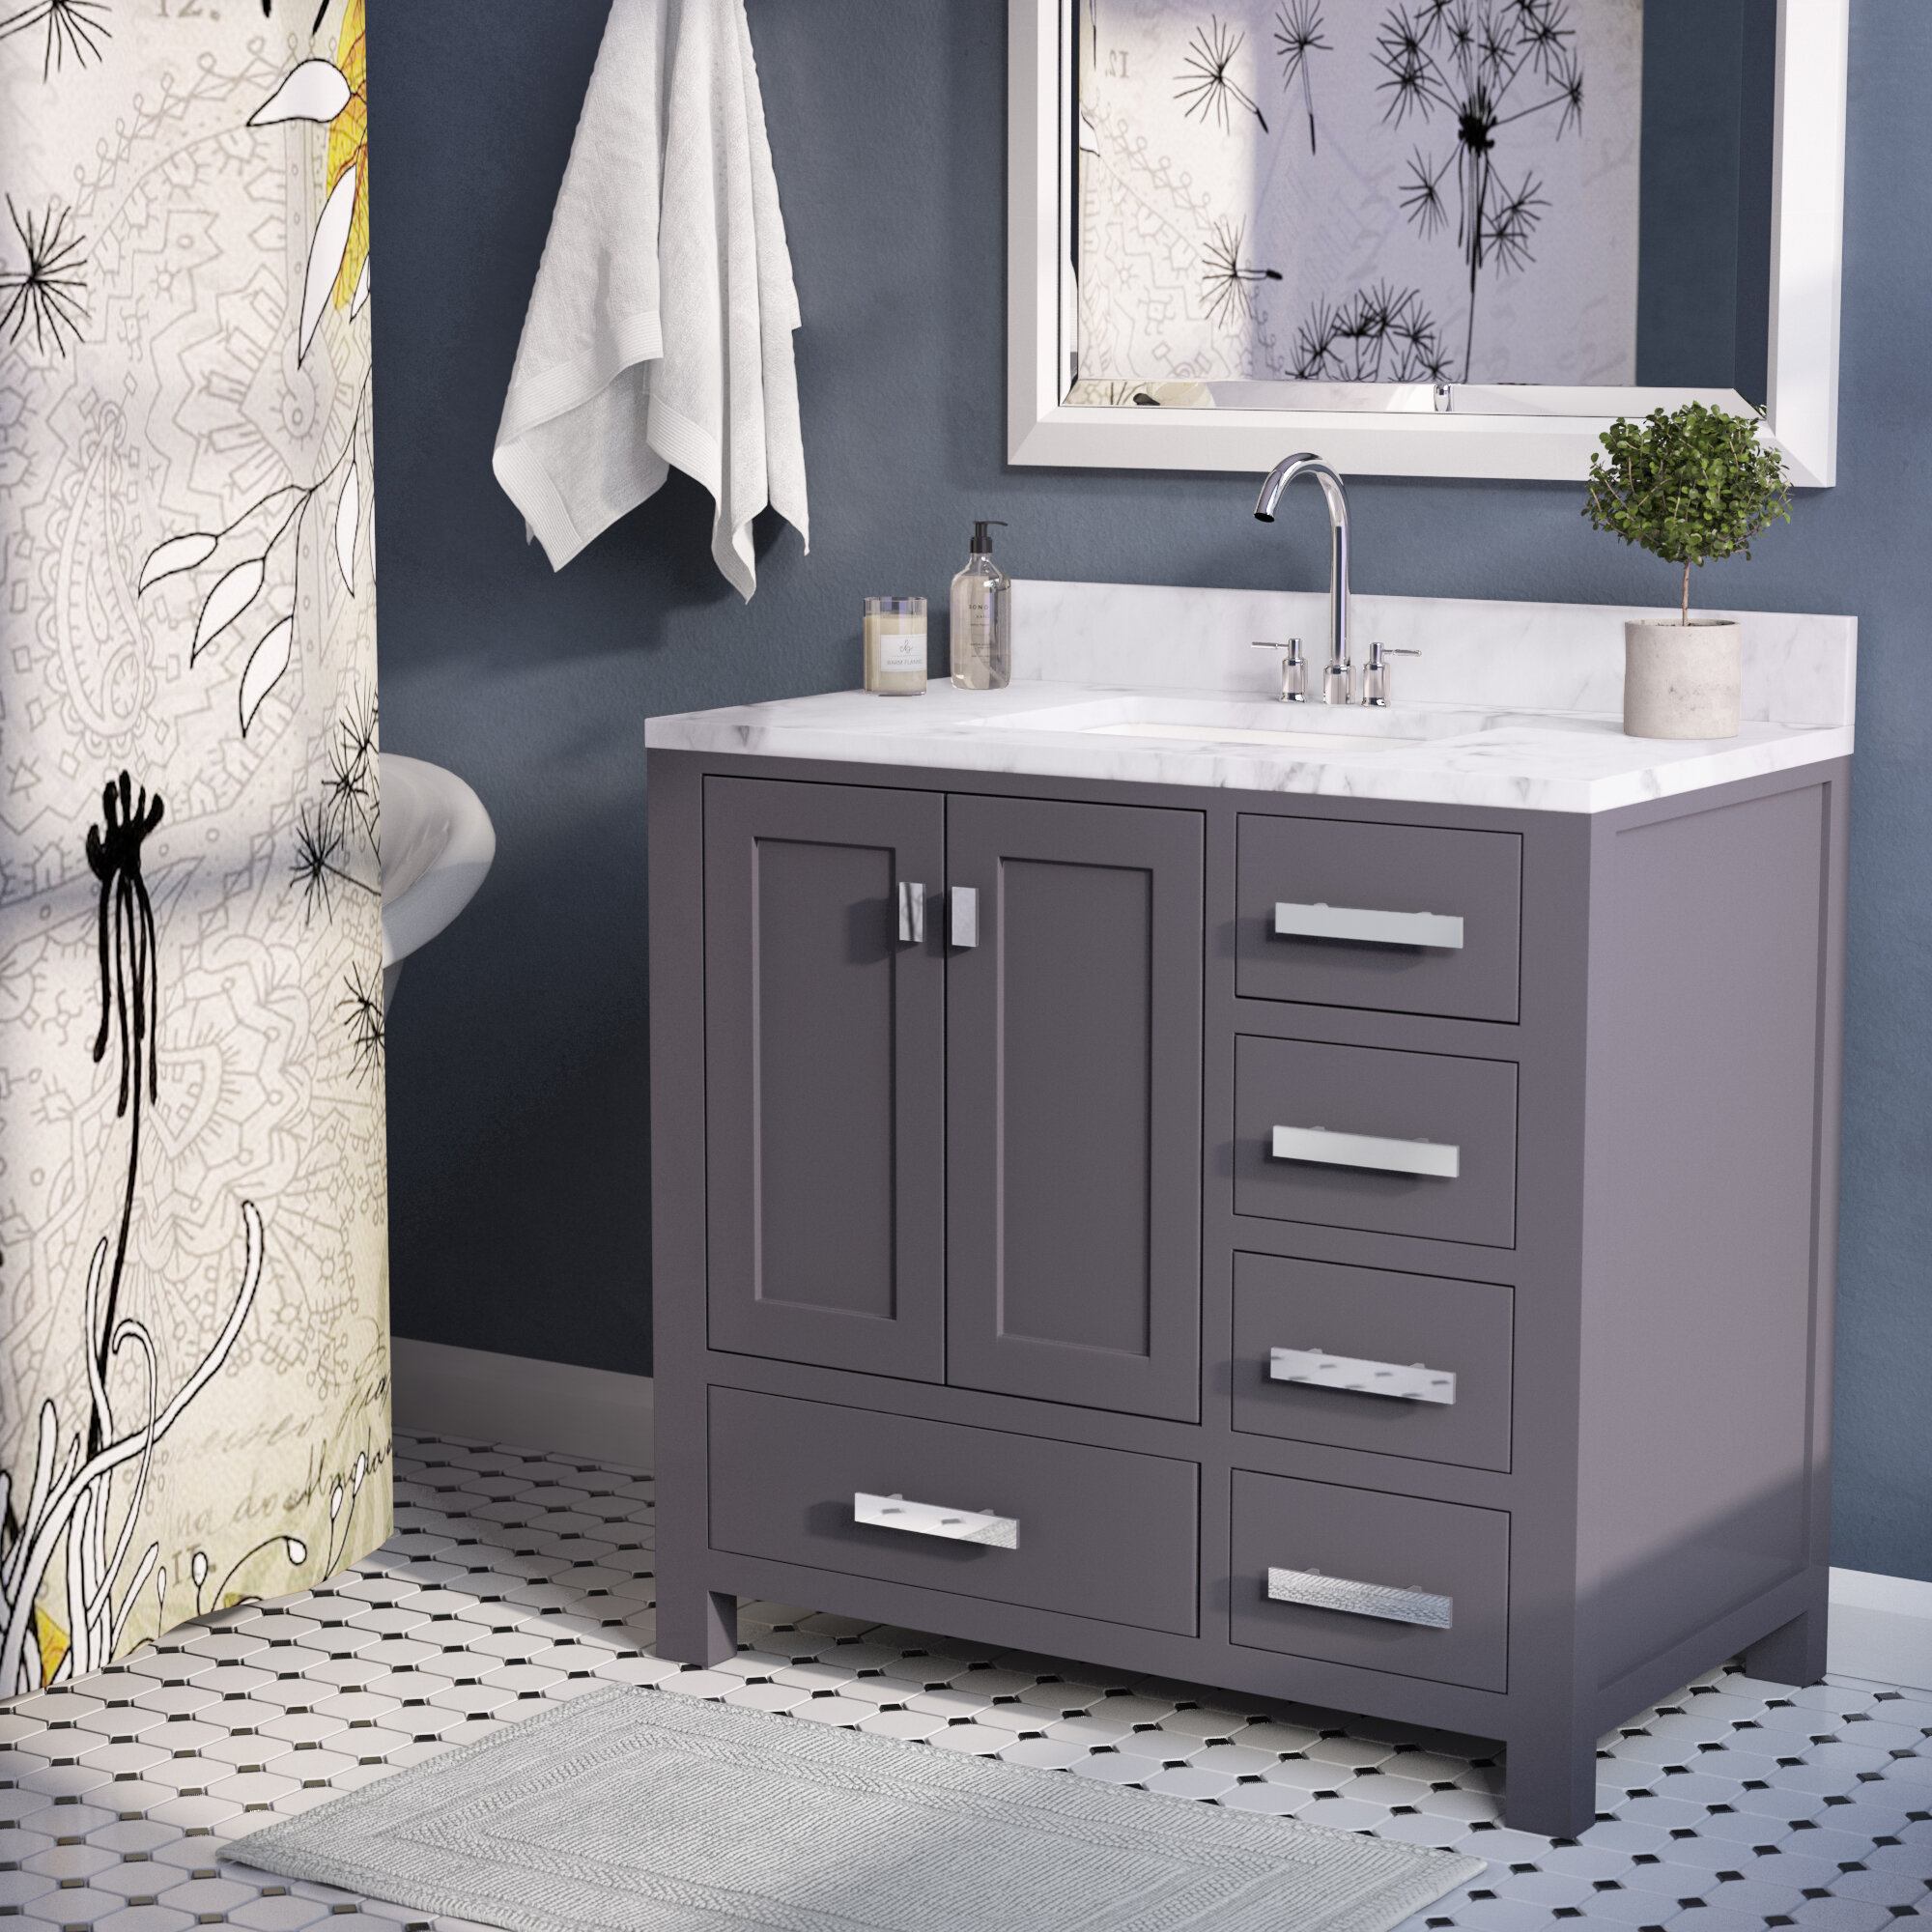 Modern Contemporary Bathroom Vanities You Ll Love In 2021 Wayfair